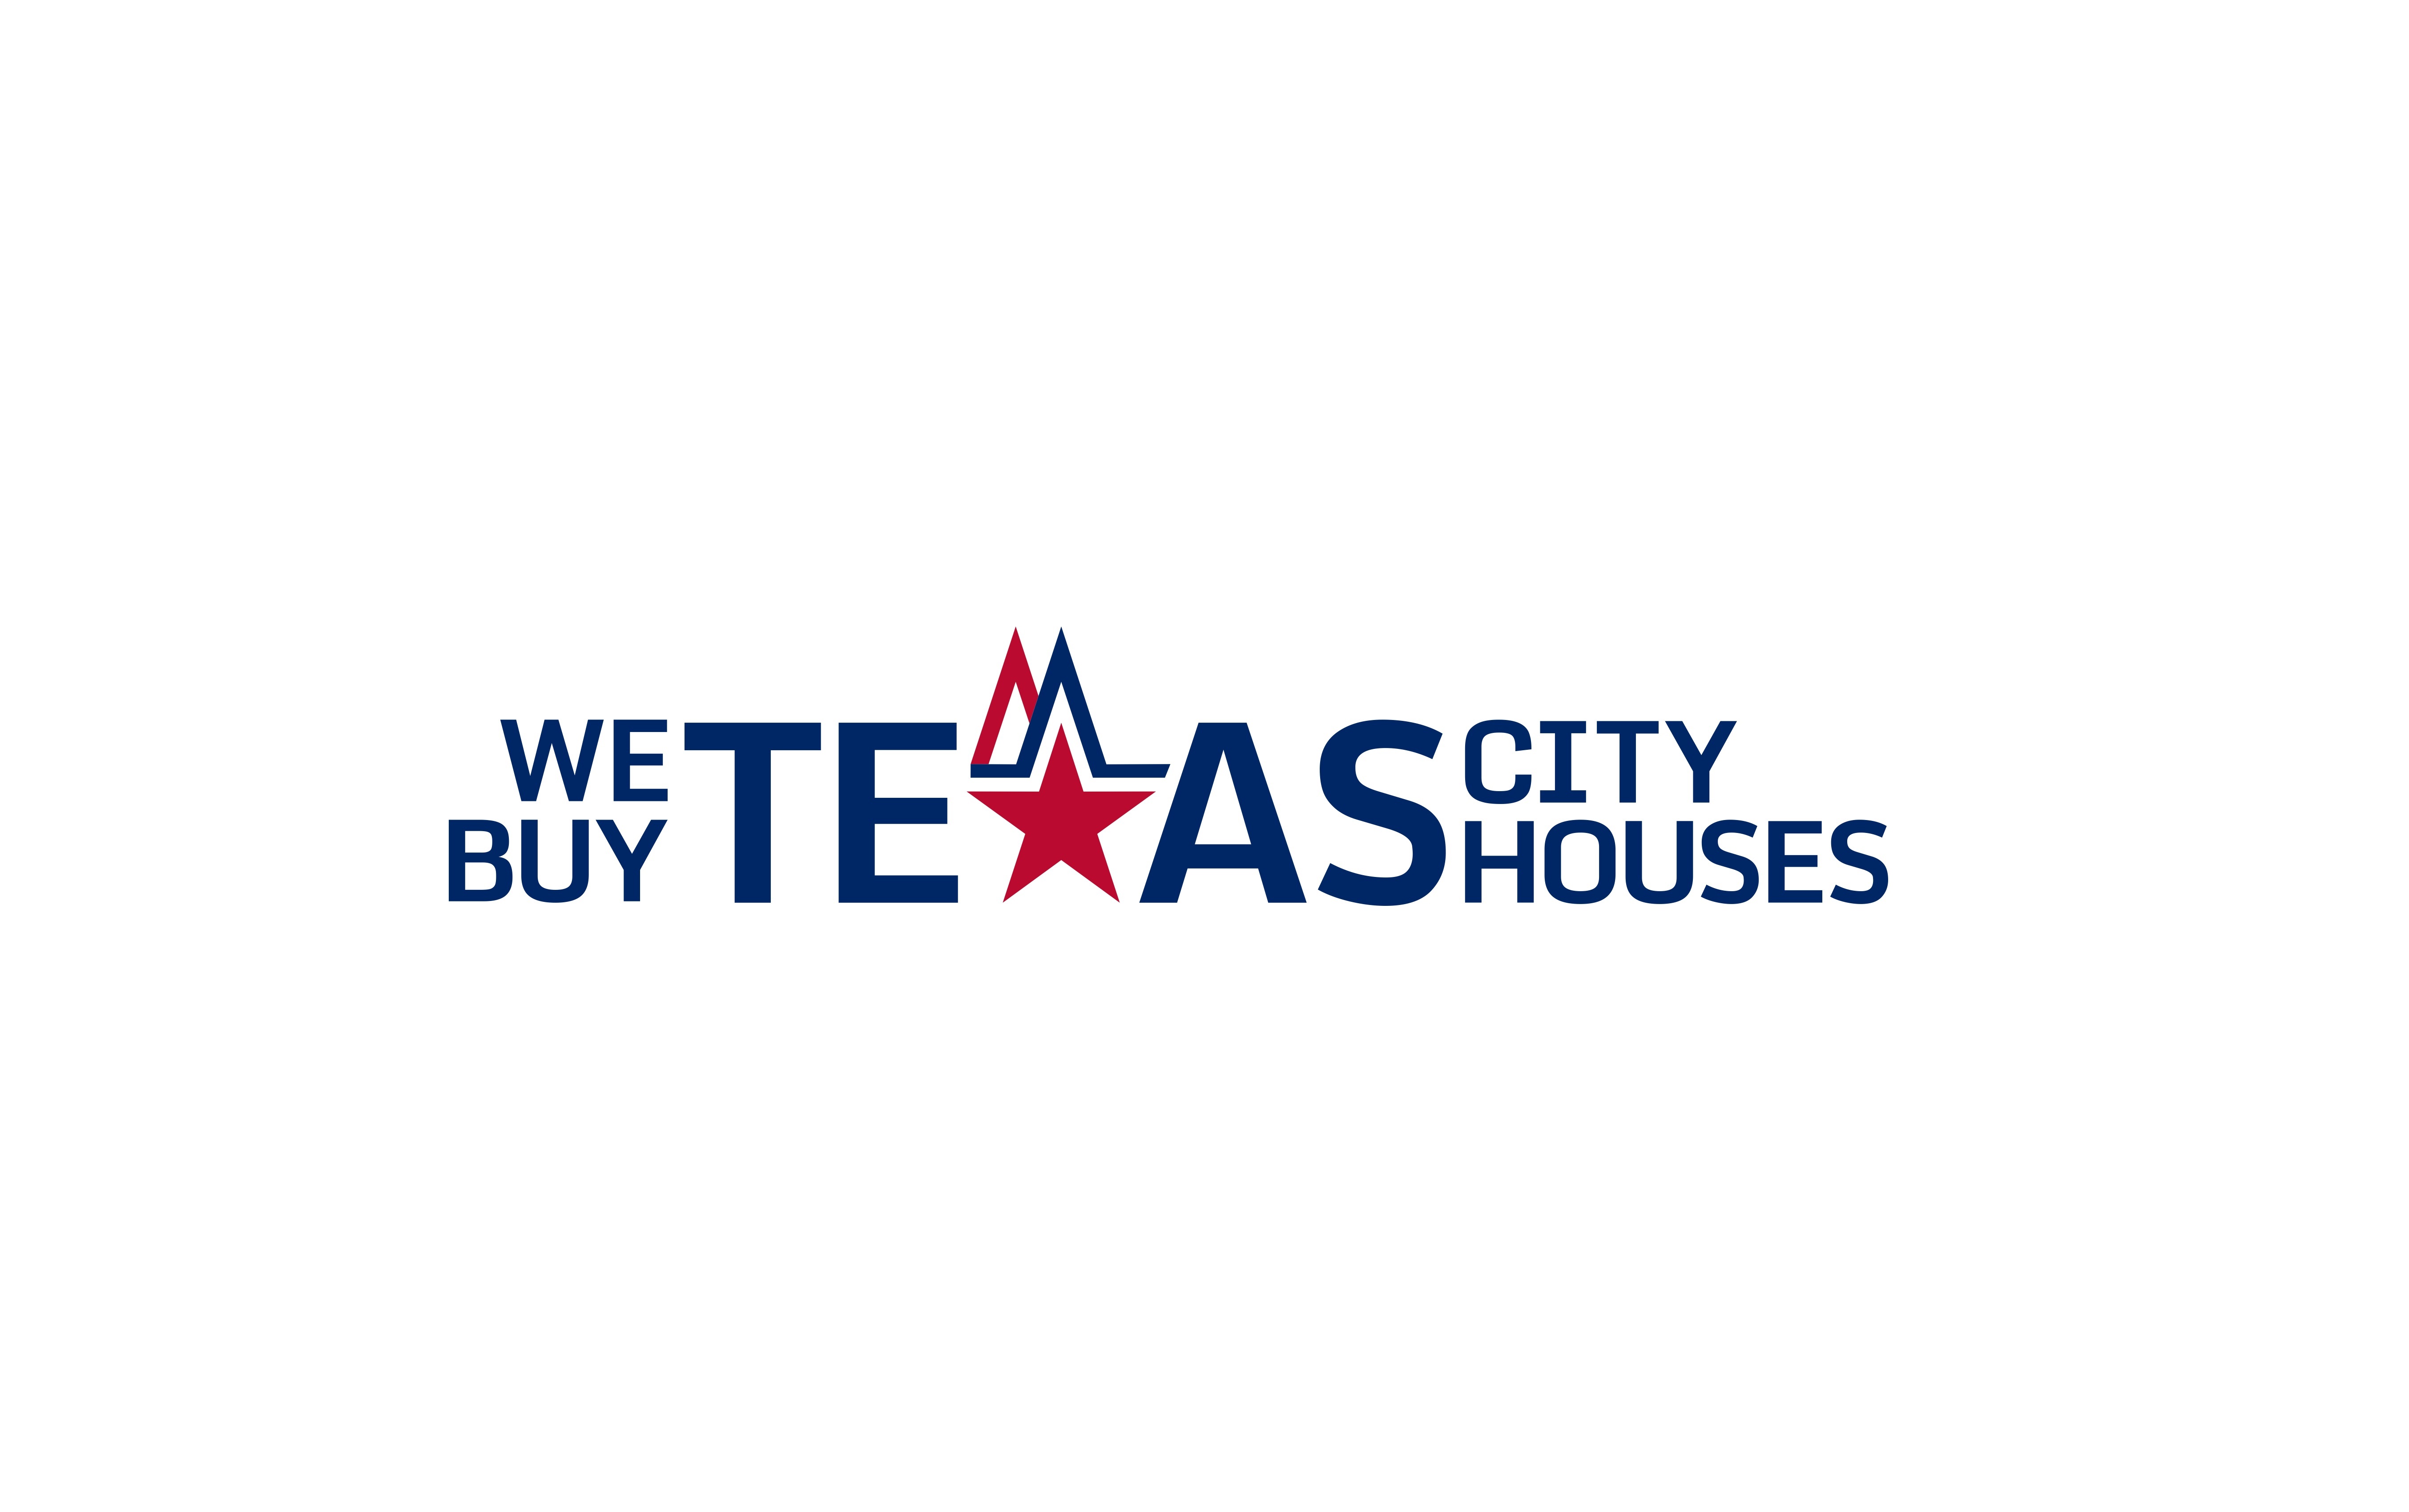 We Buy Texas City Houses